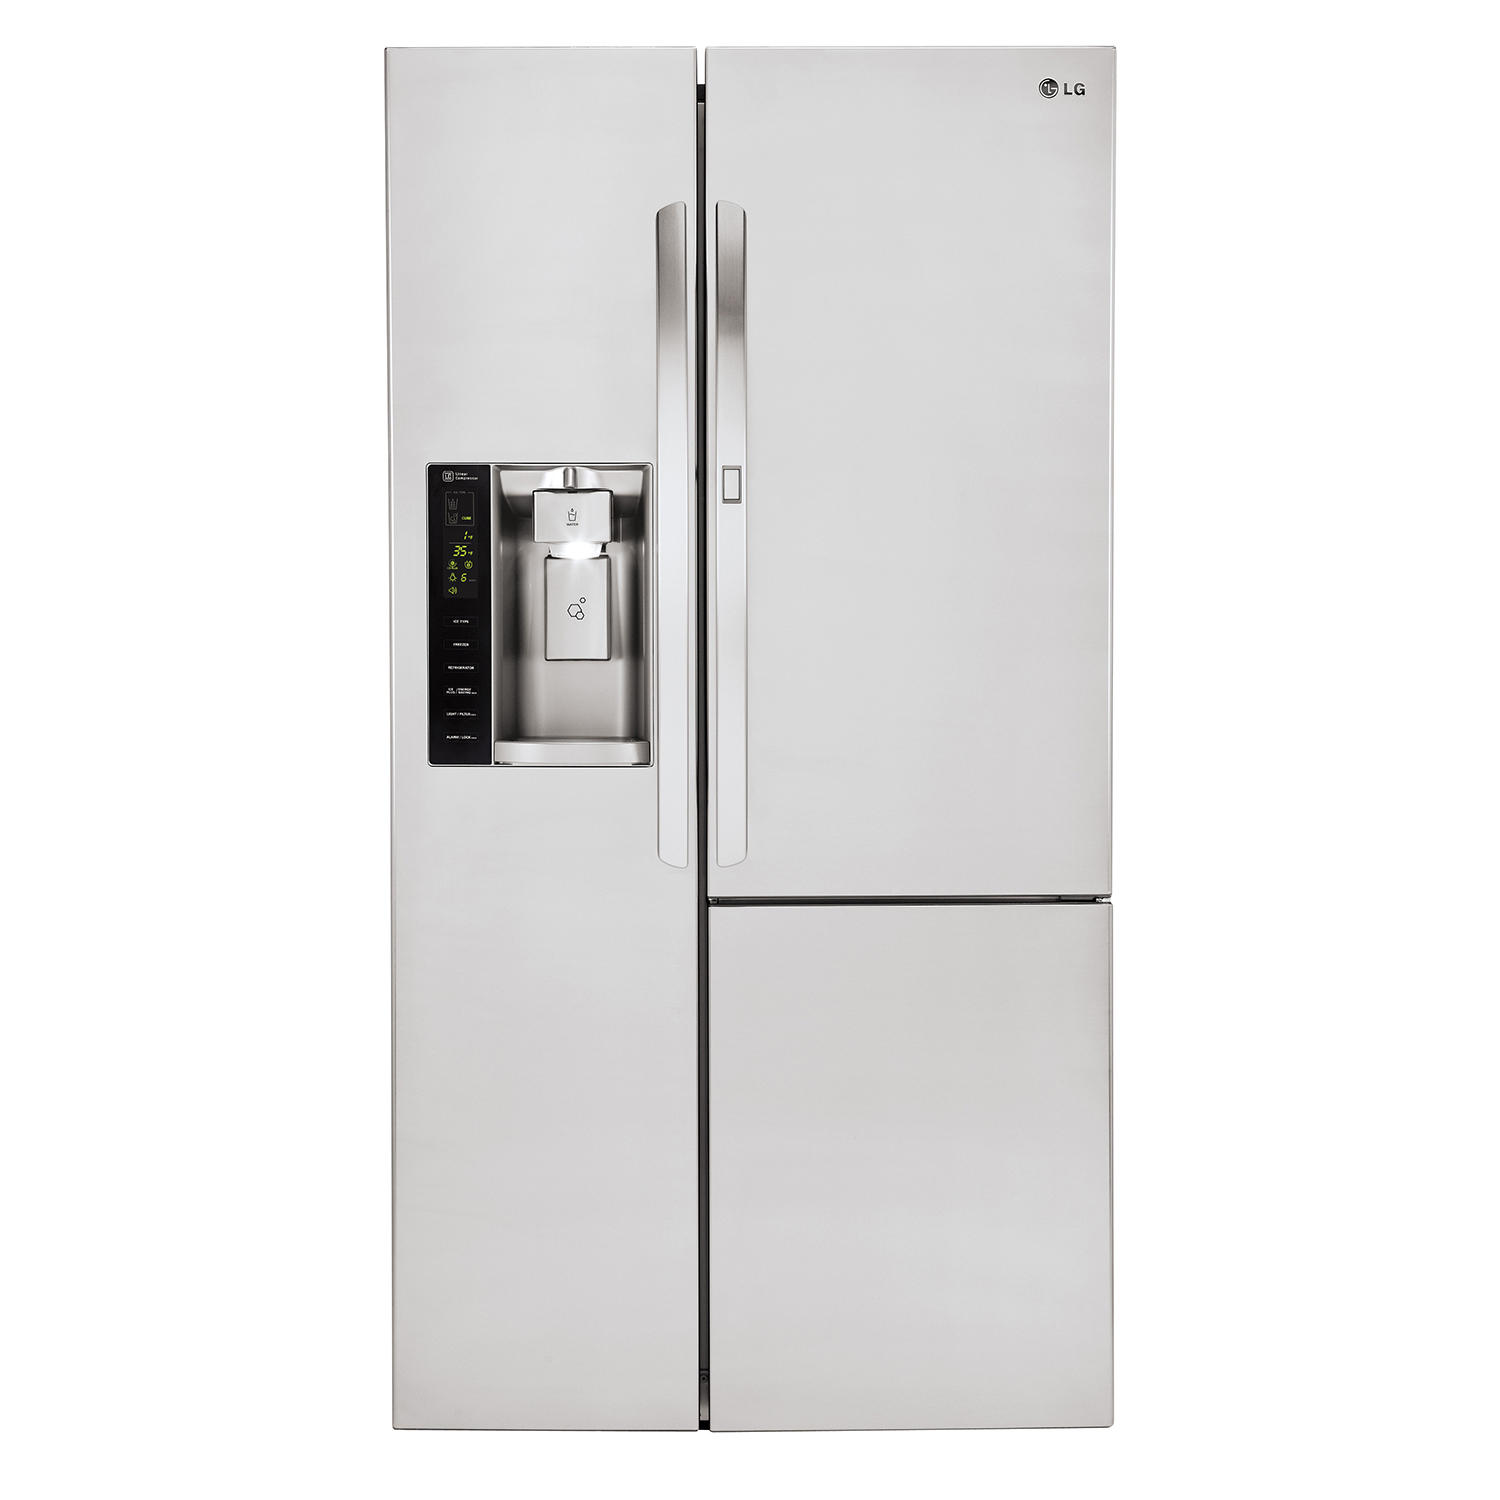 LG LSXS26366S 26 cu. ft. Side-by-Side Refrigerator